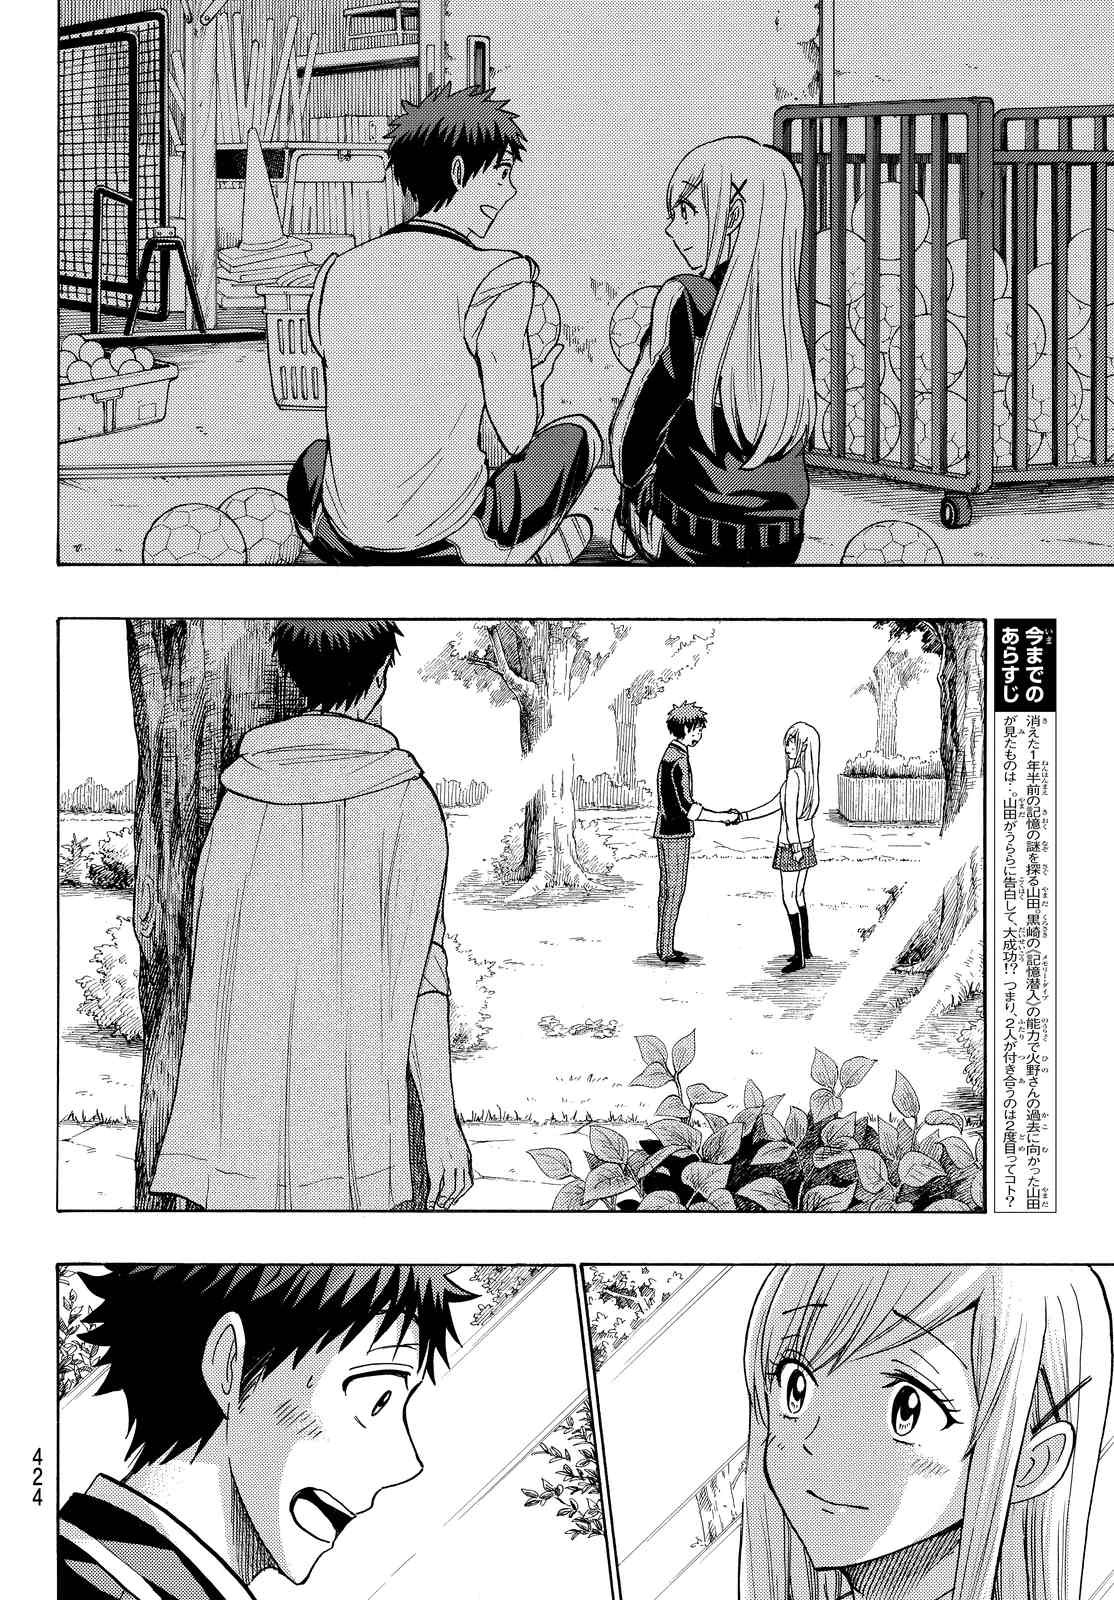 Yamada-kun to 7-nin no Majo - Chapter 213 - Page 2